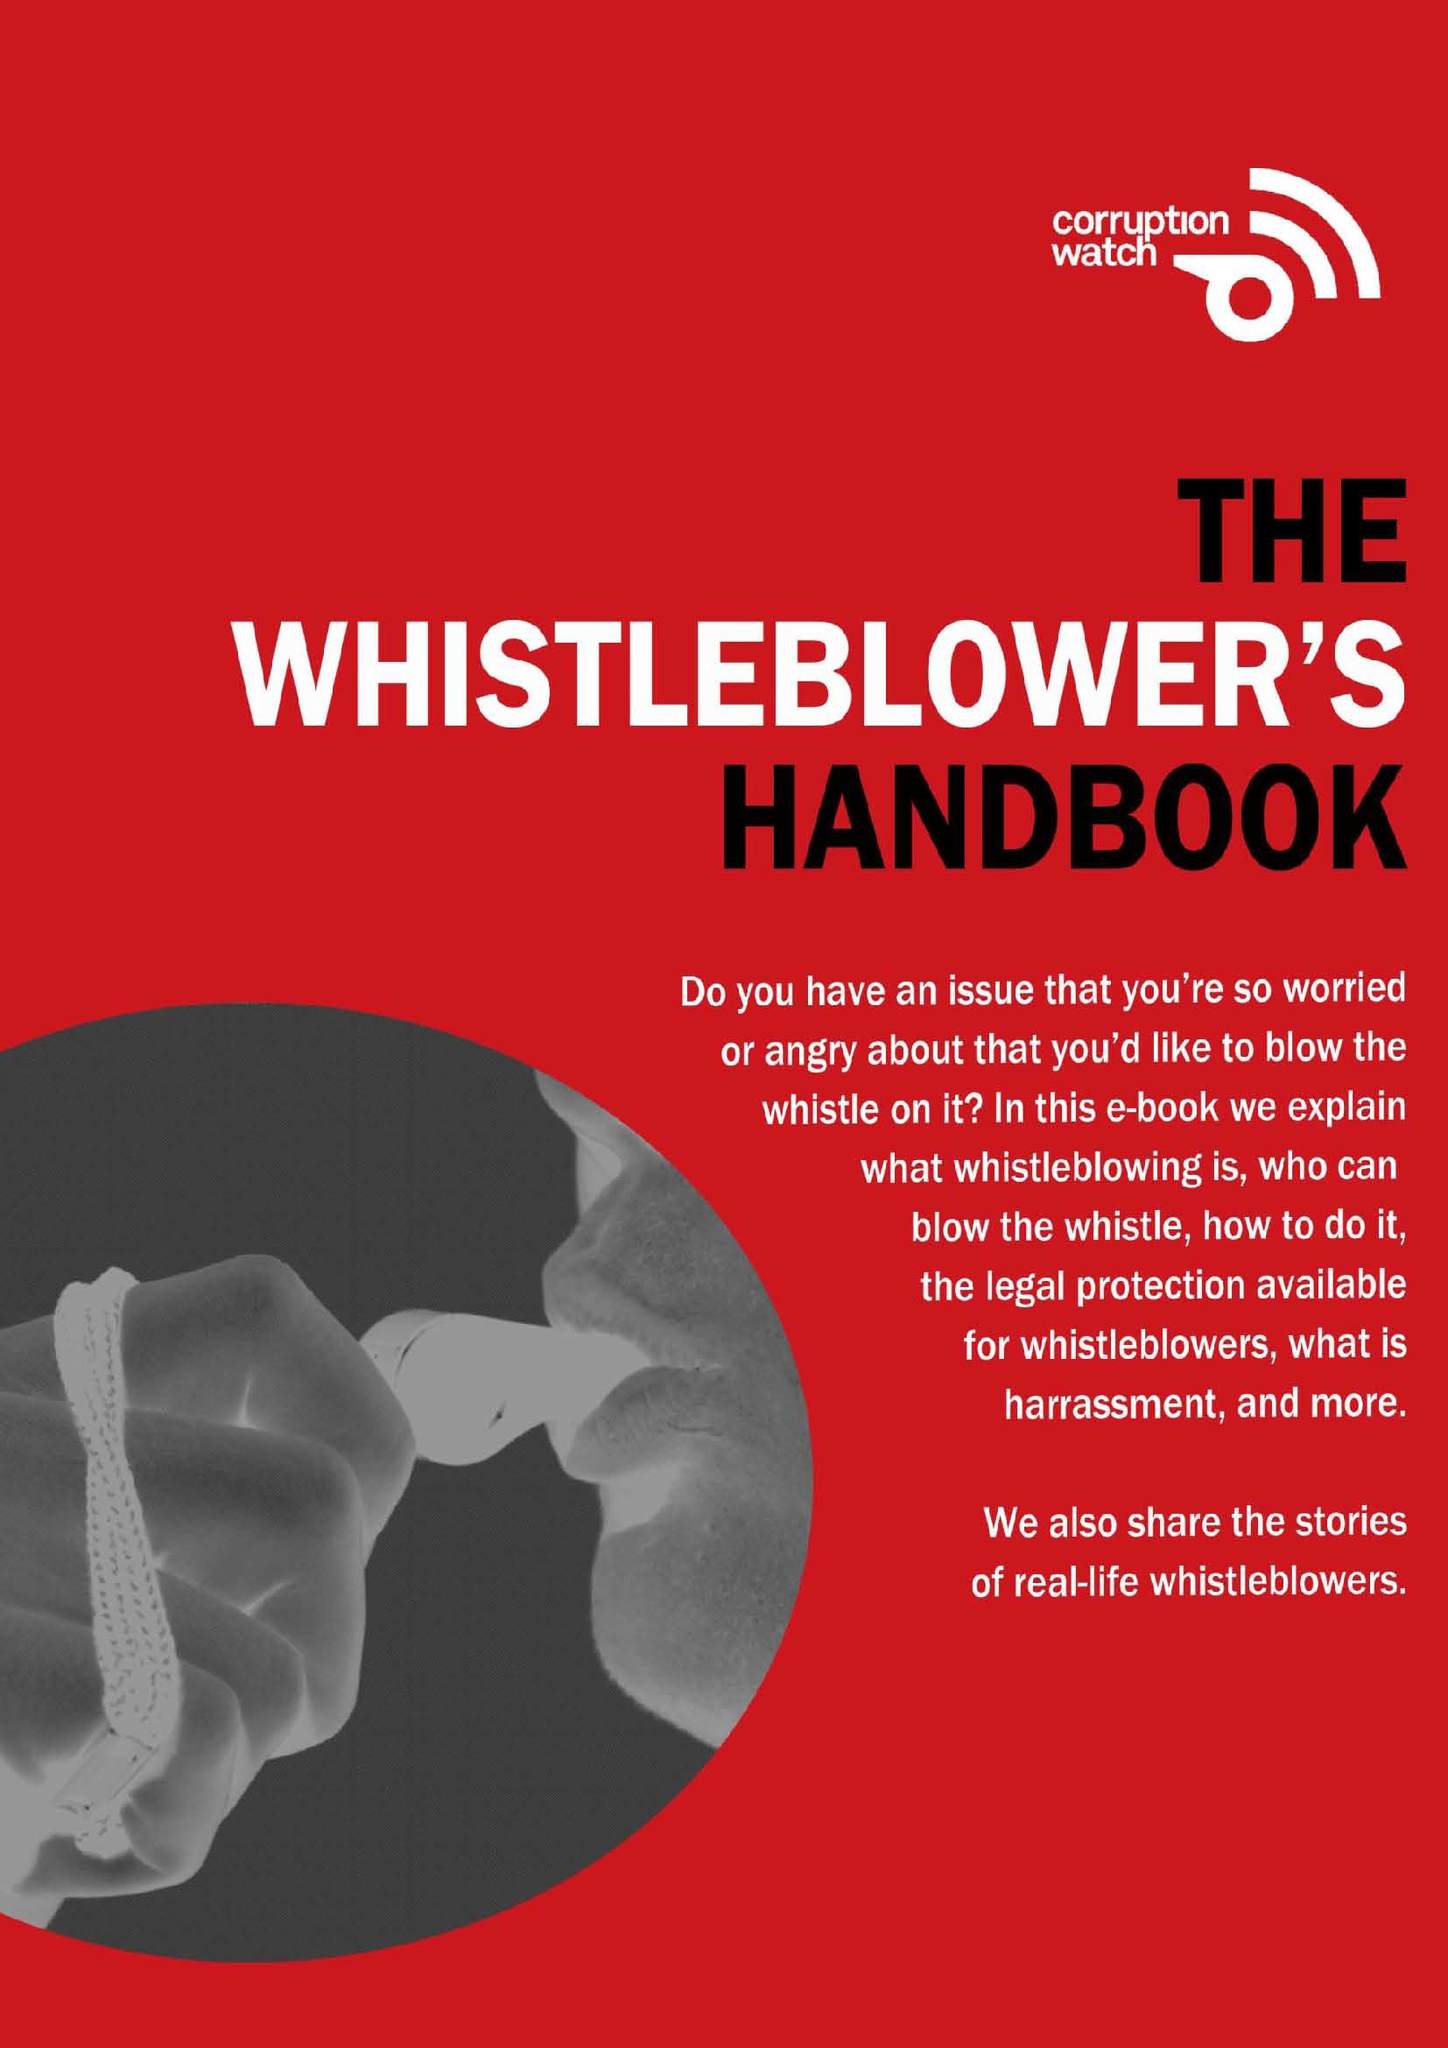 The whistleblower's handbook